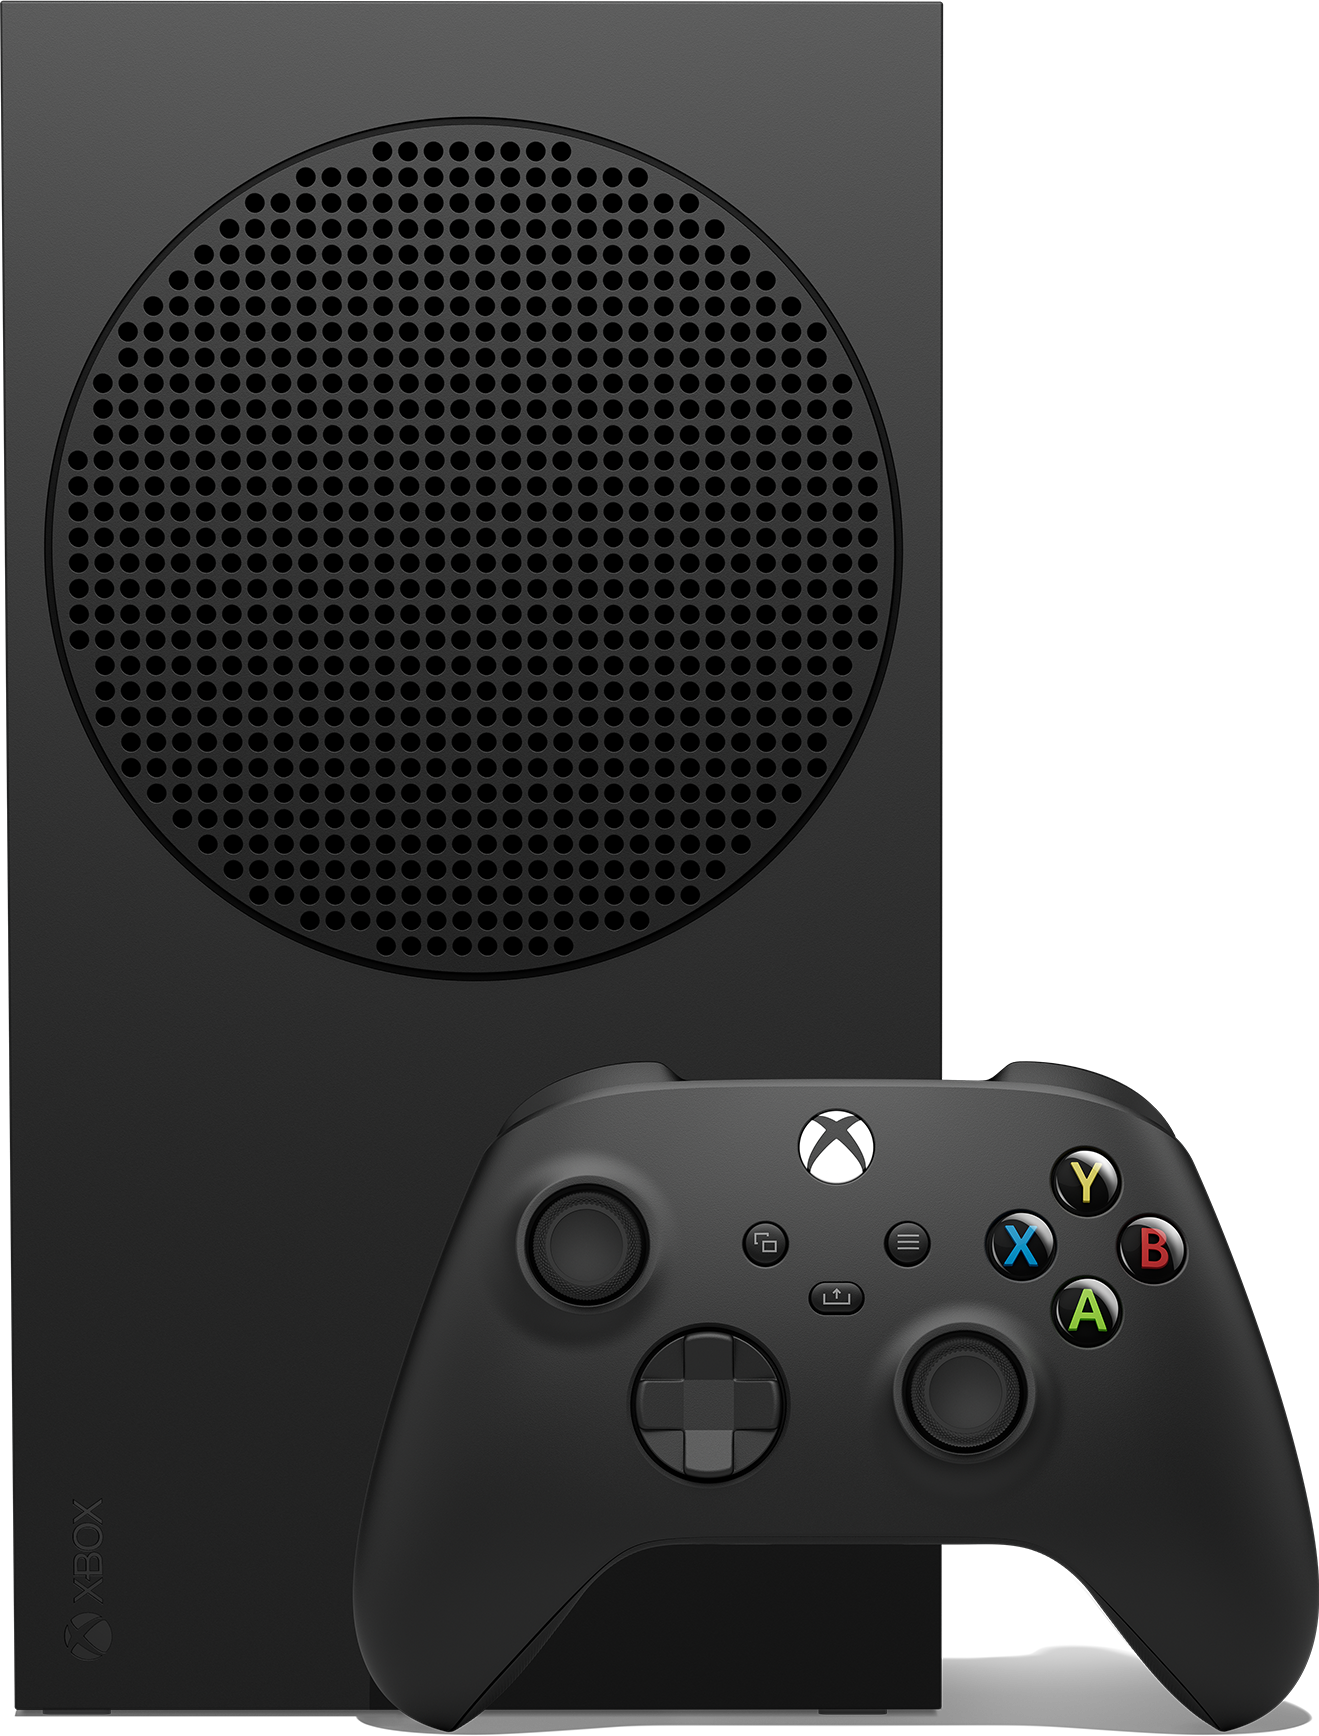 Xbox Series S – 1TB (Schwarz)